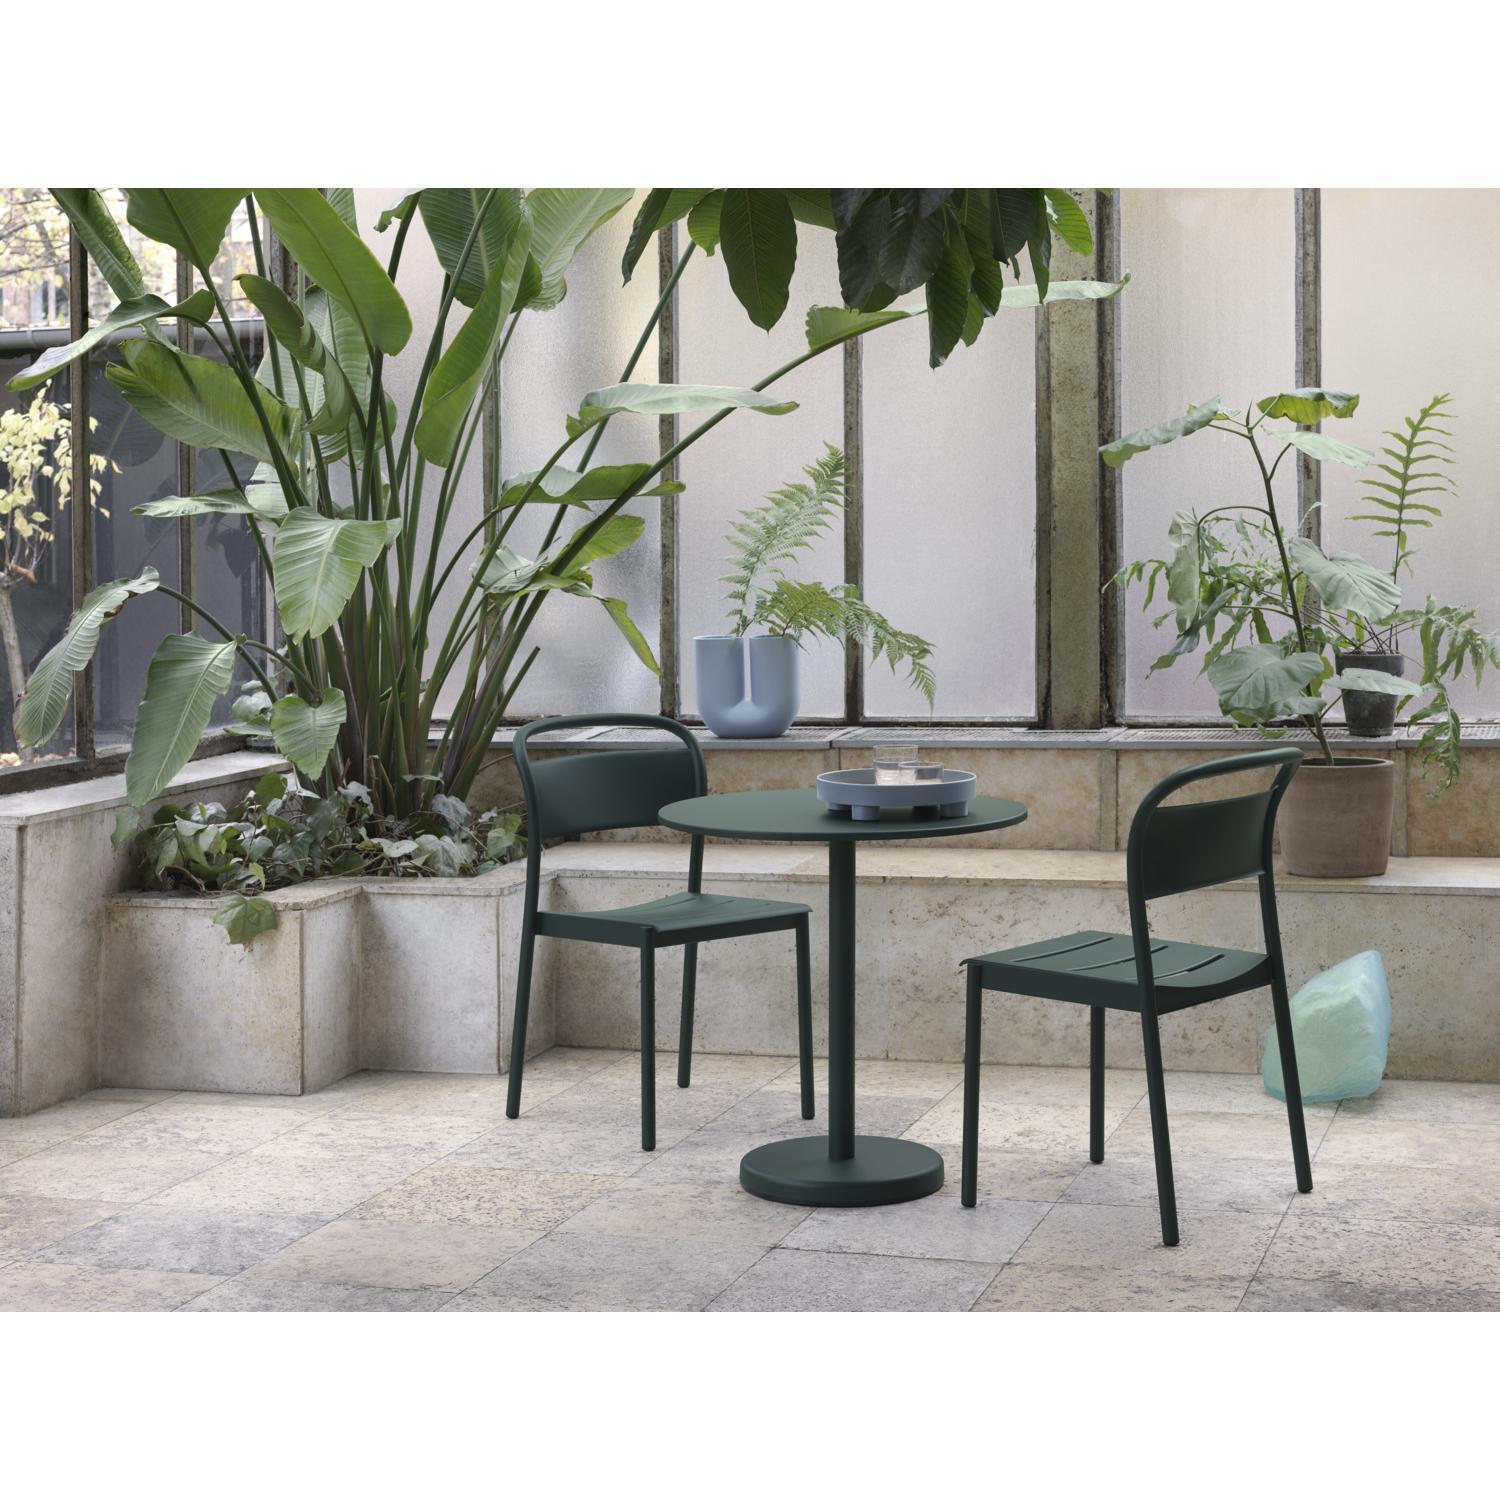 Muuto Linear Steel Café Table 70 X70 Cm, Dark Green